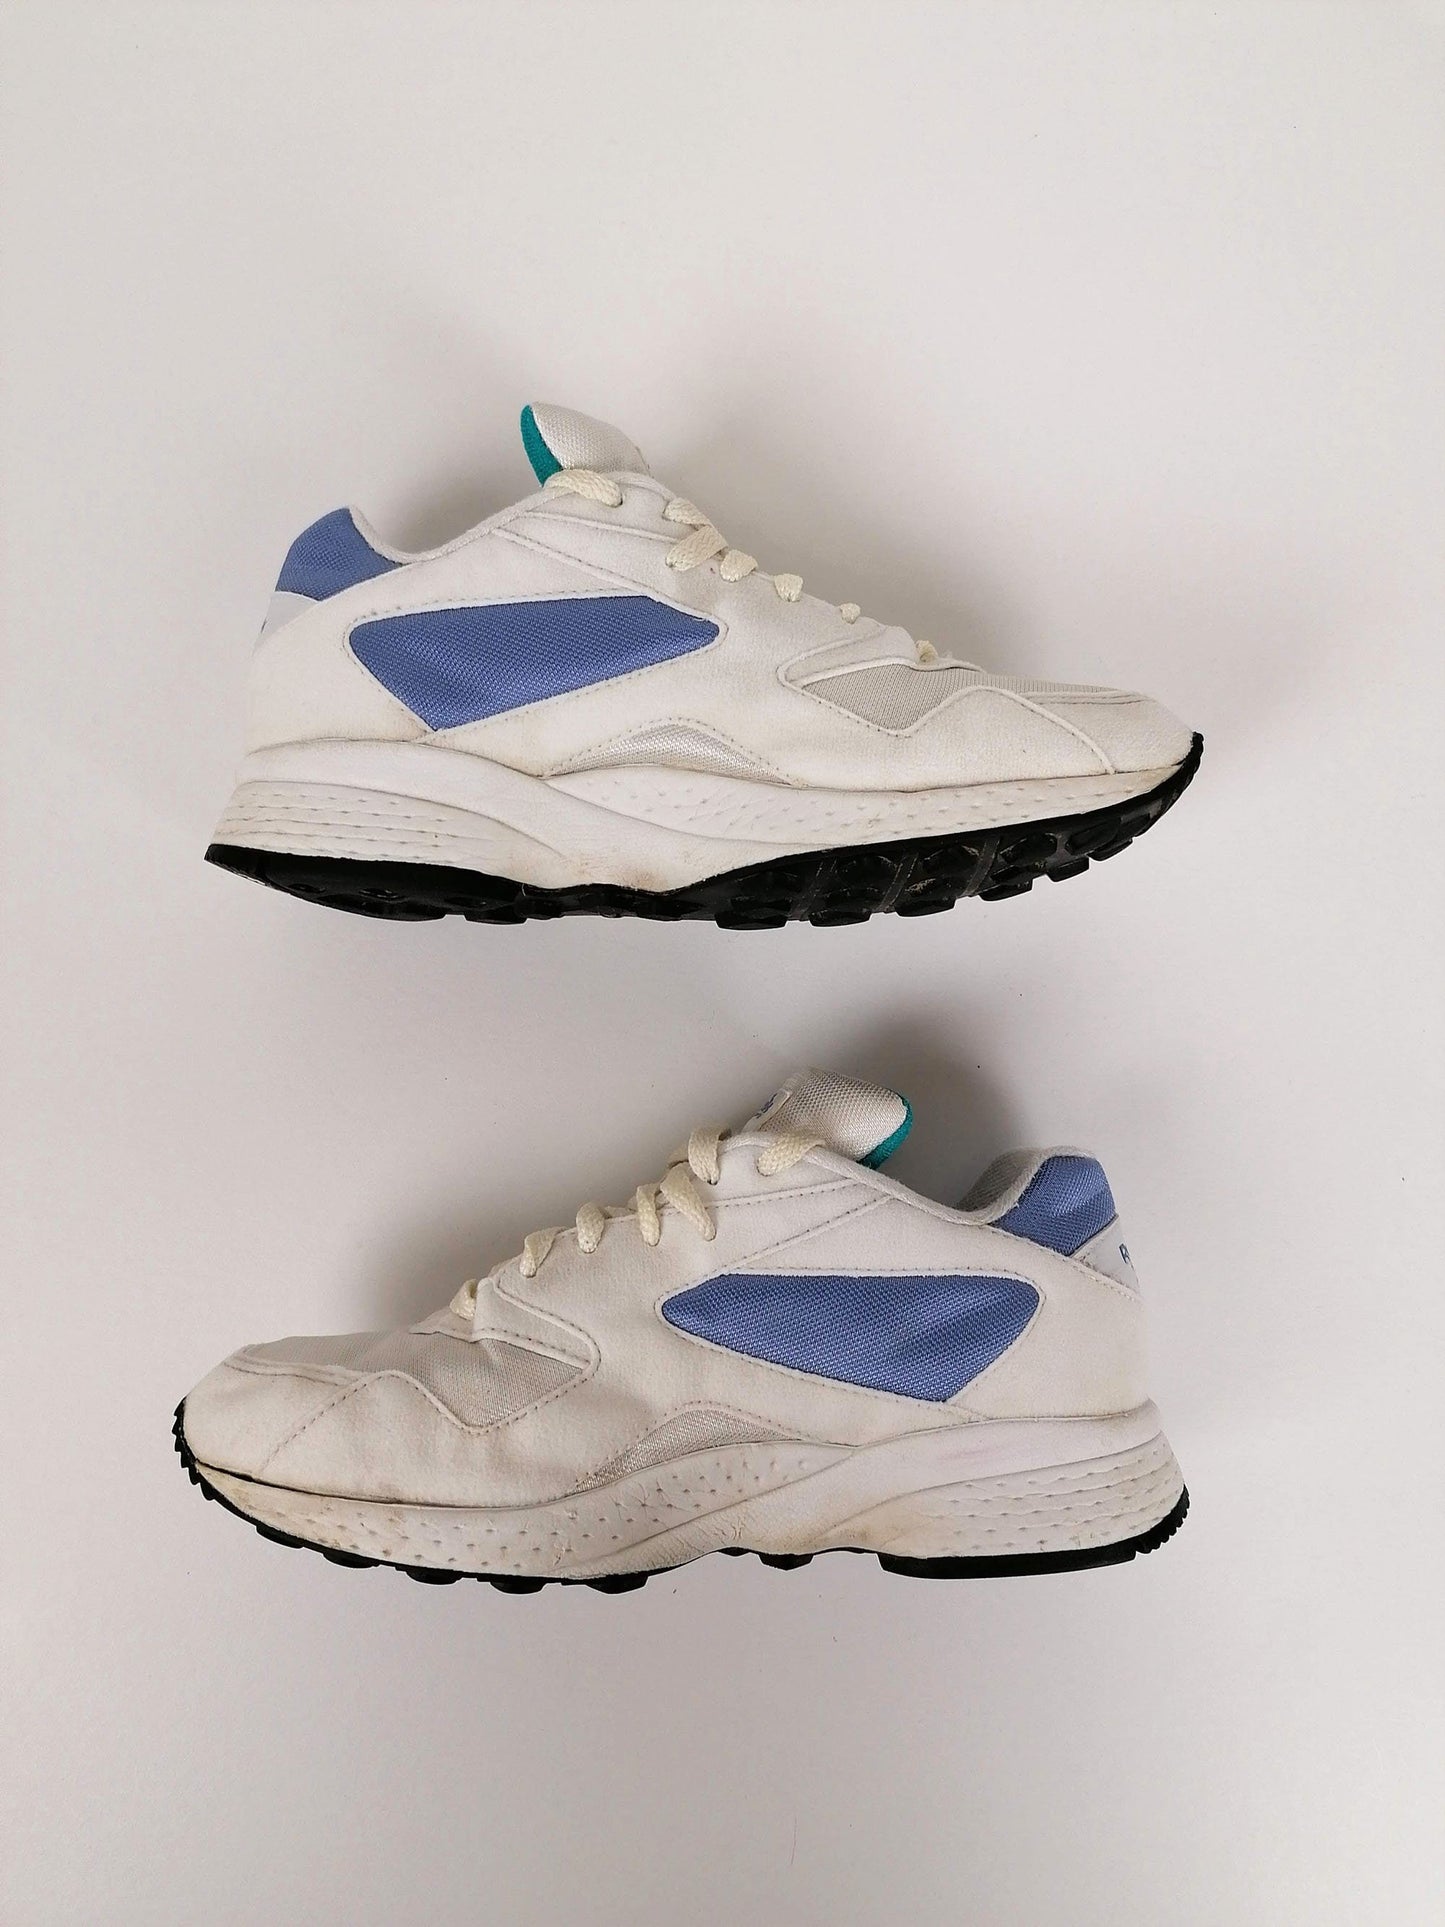 Vintage 80's 90's REEBOK Classic Retro Sneakers - size EU 38 / UK 5.5 / us 7 -7.5